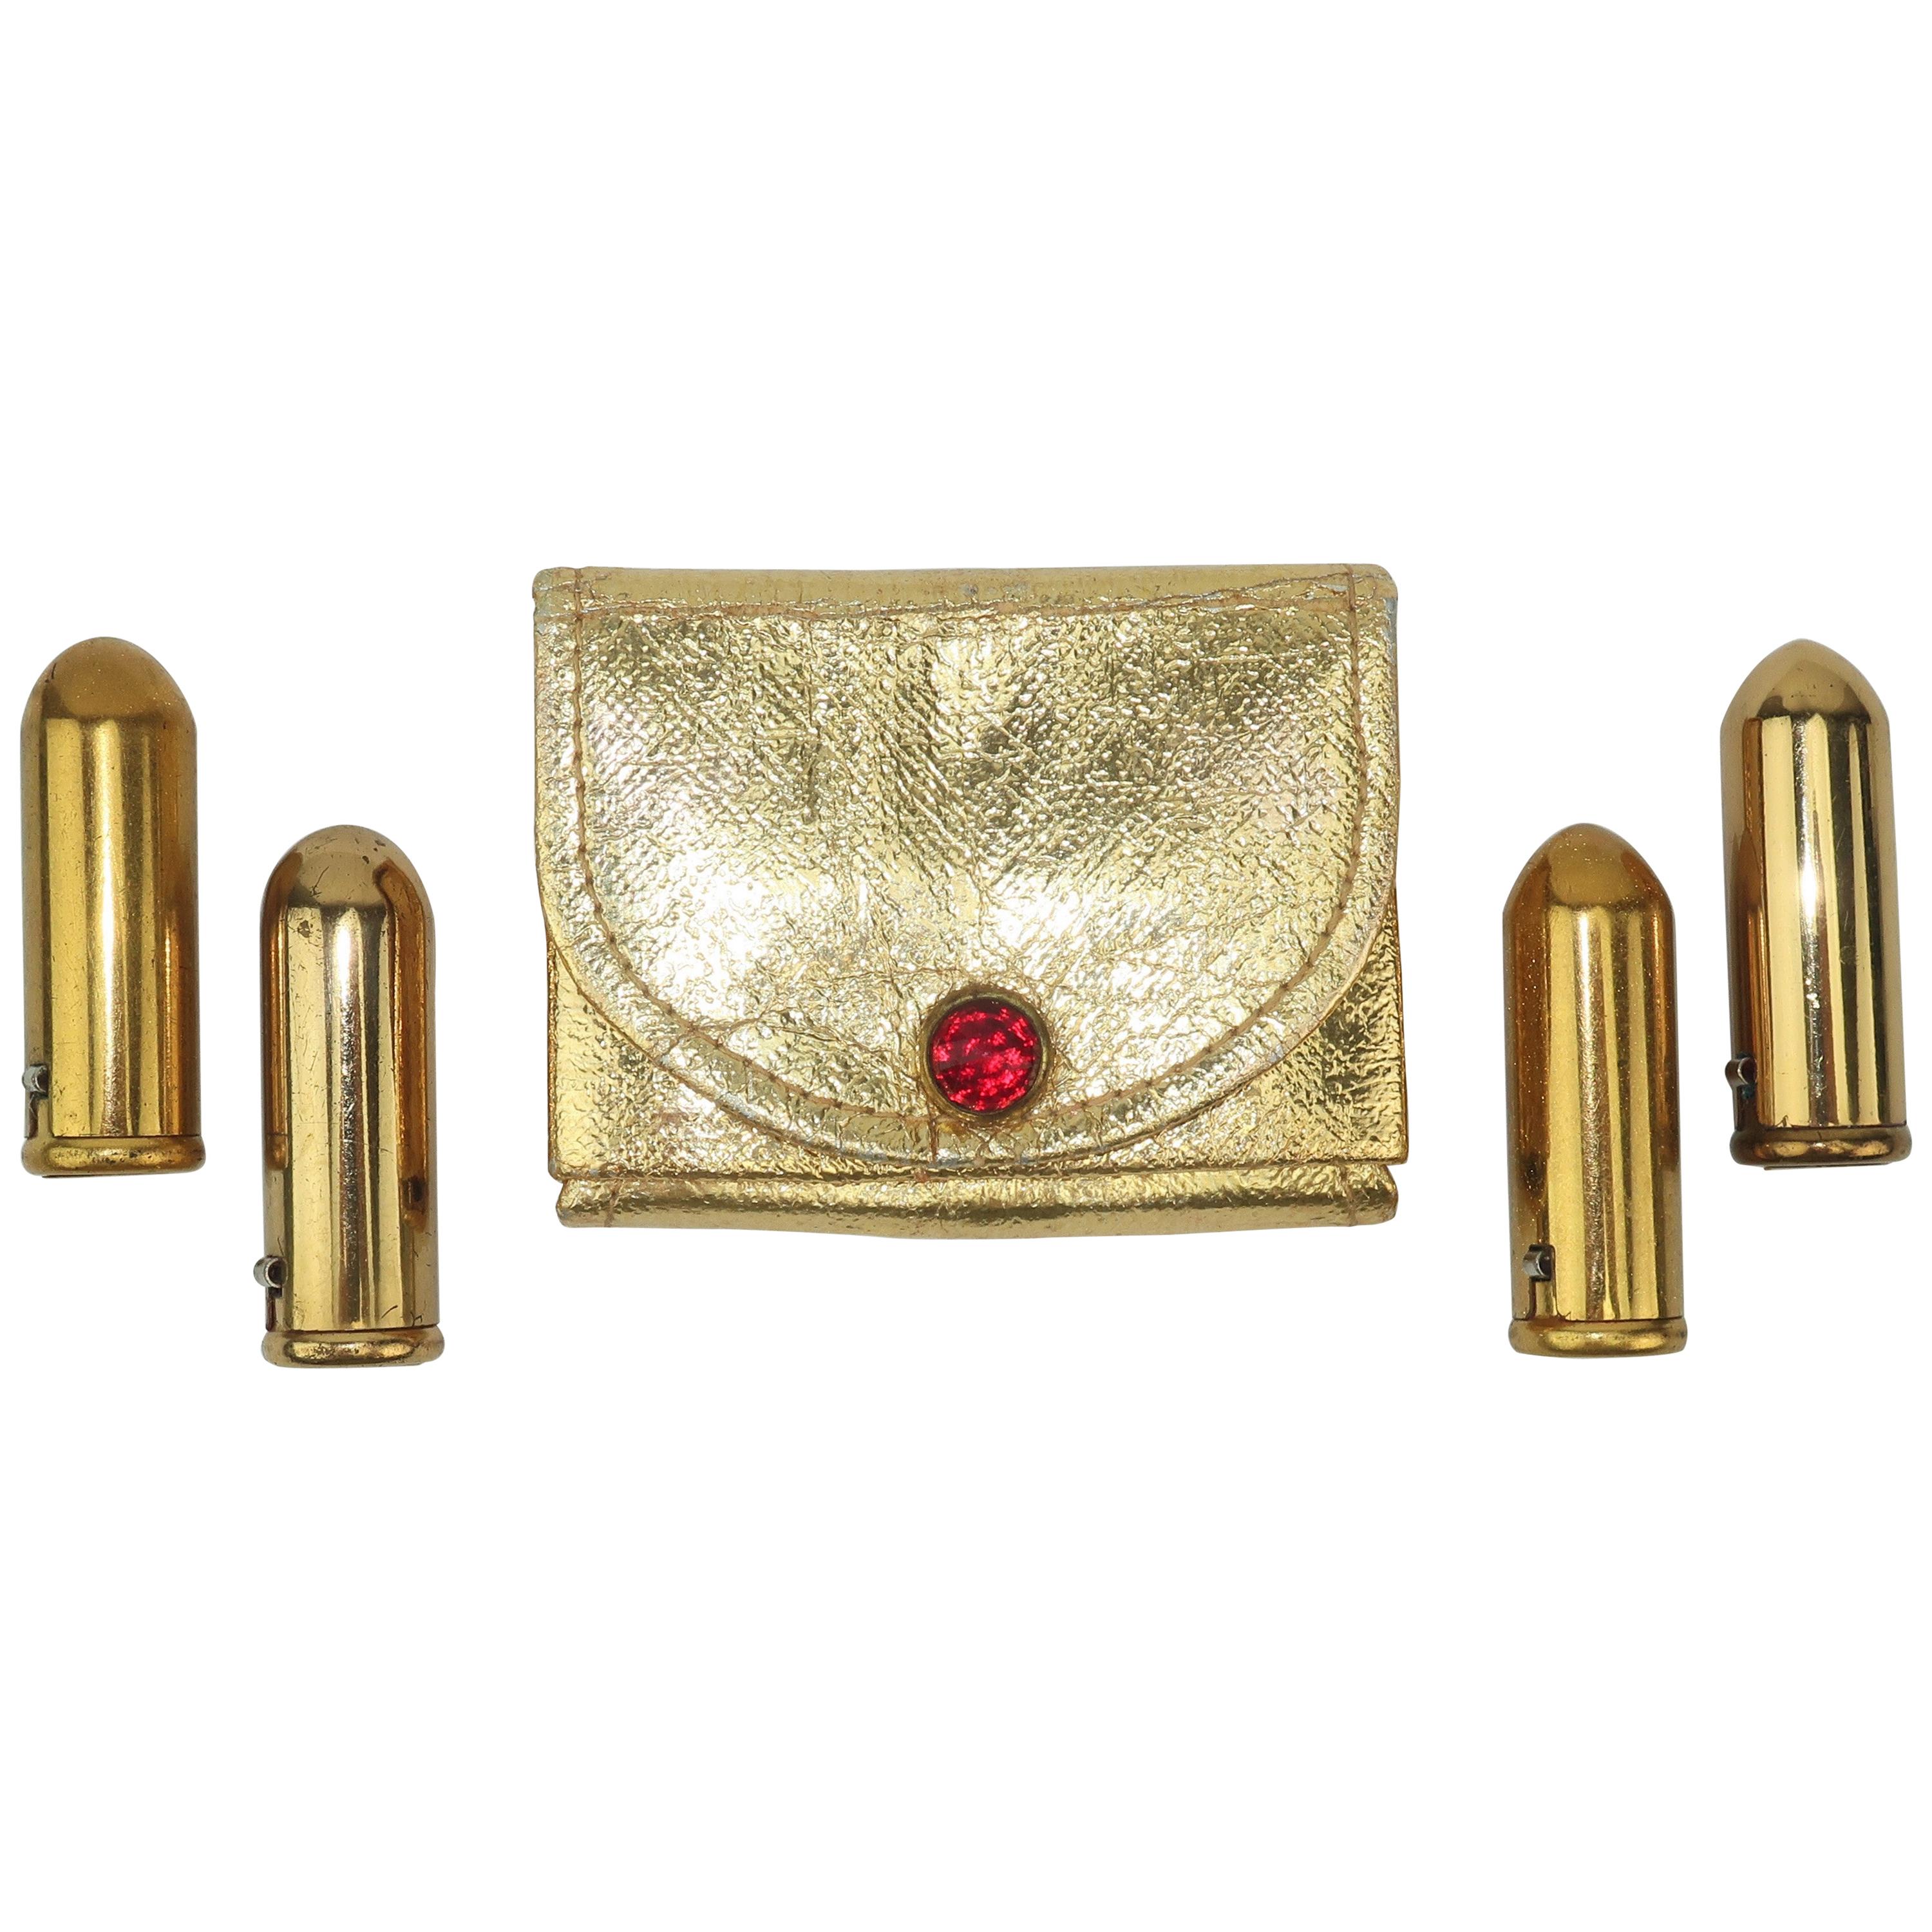 1940's Revlon 'Bullet' Lipstick Set With Gold Case